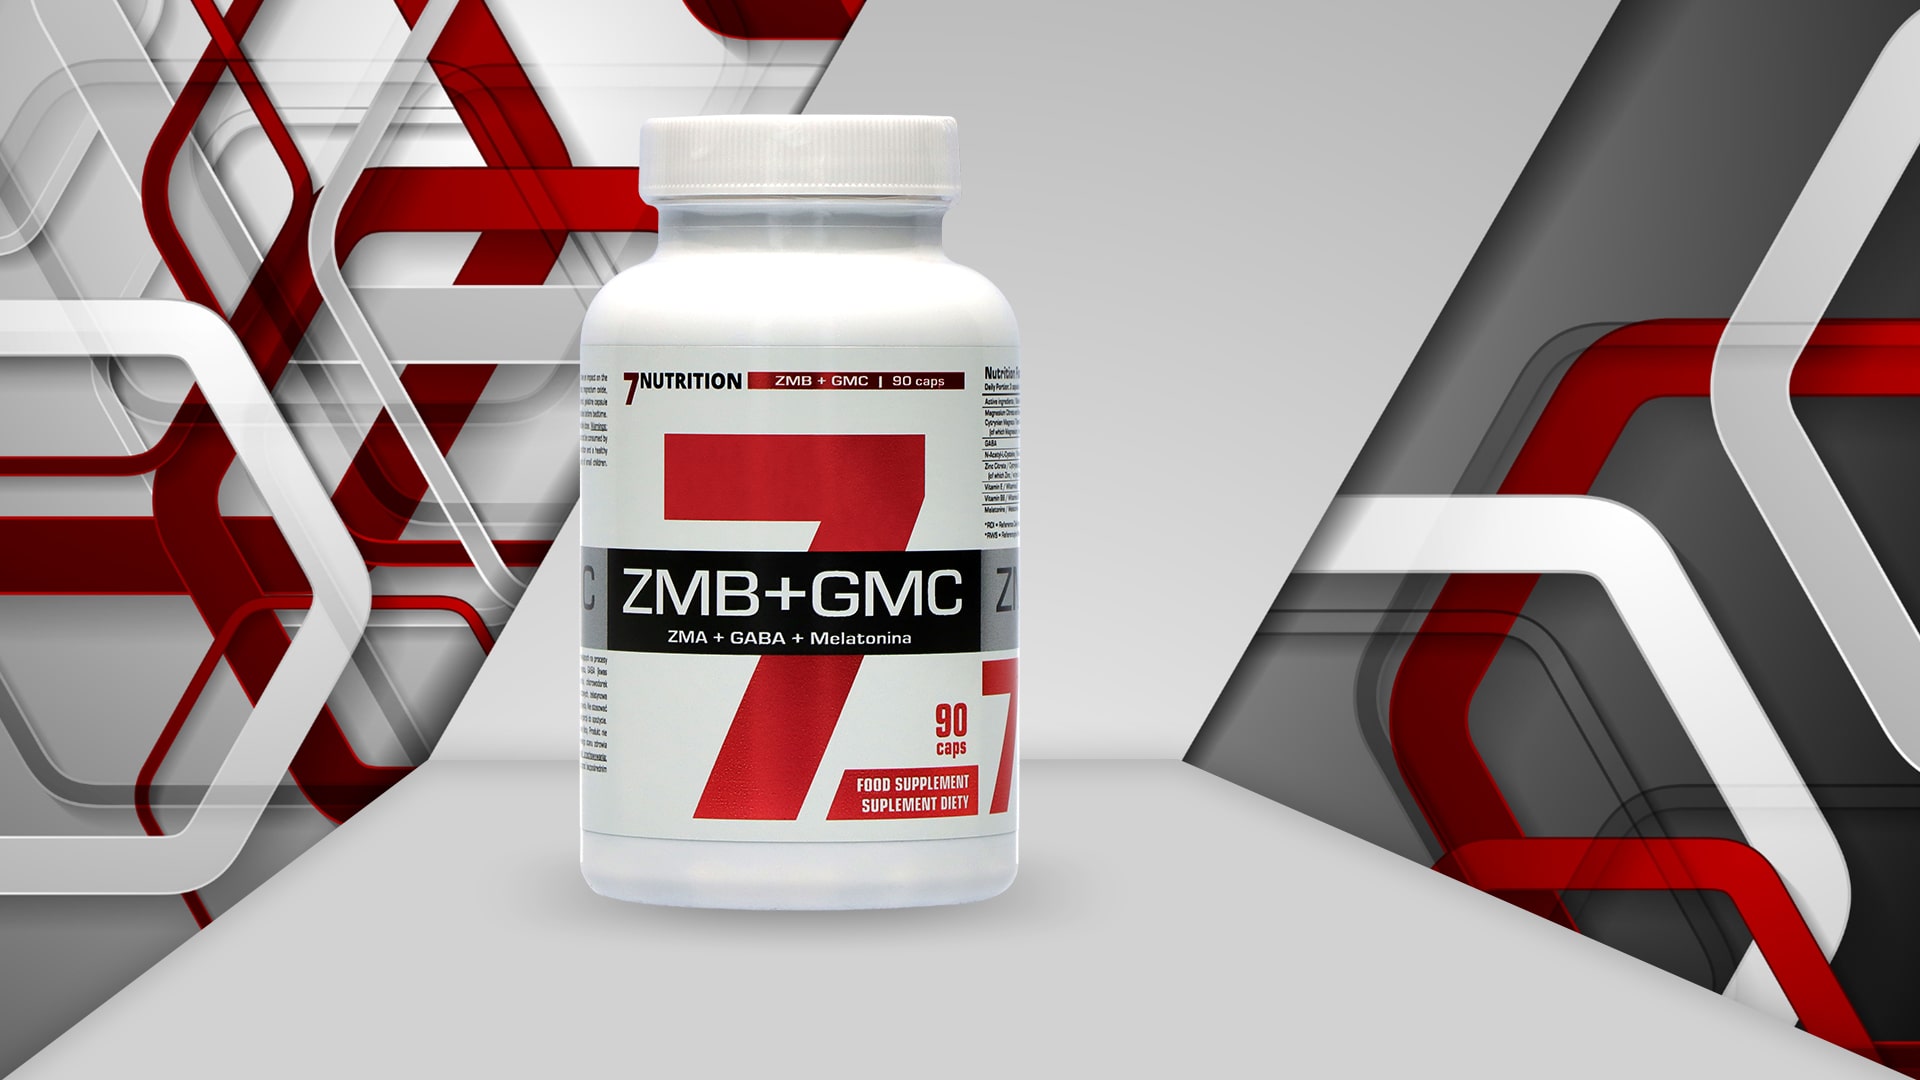 7 Nutrition - ZMB + GMC